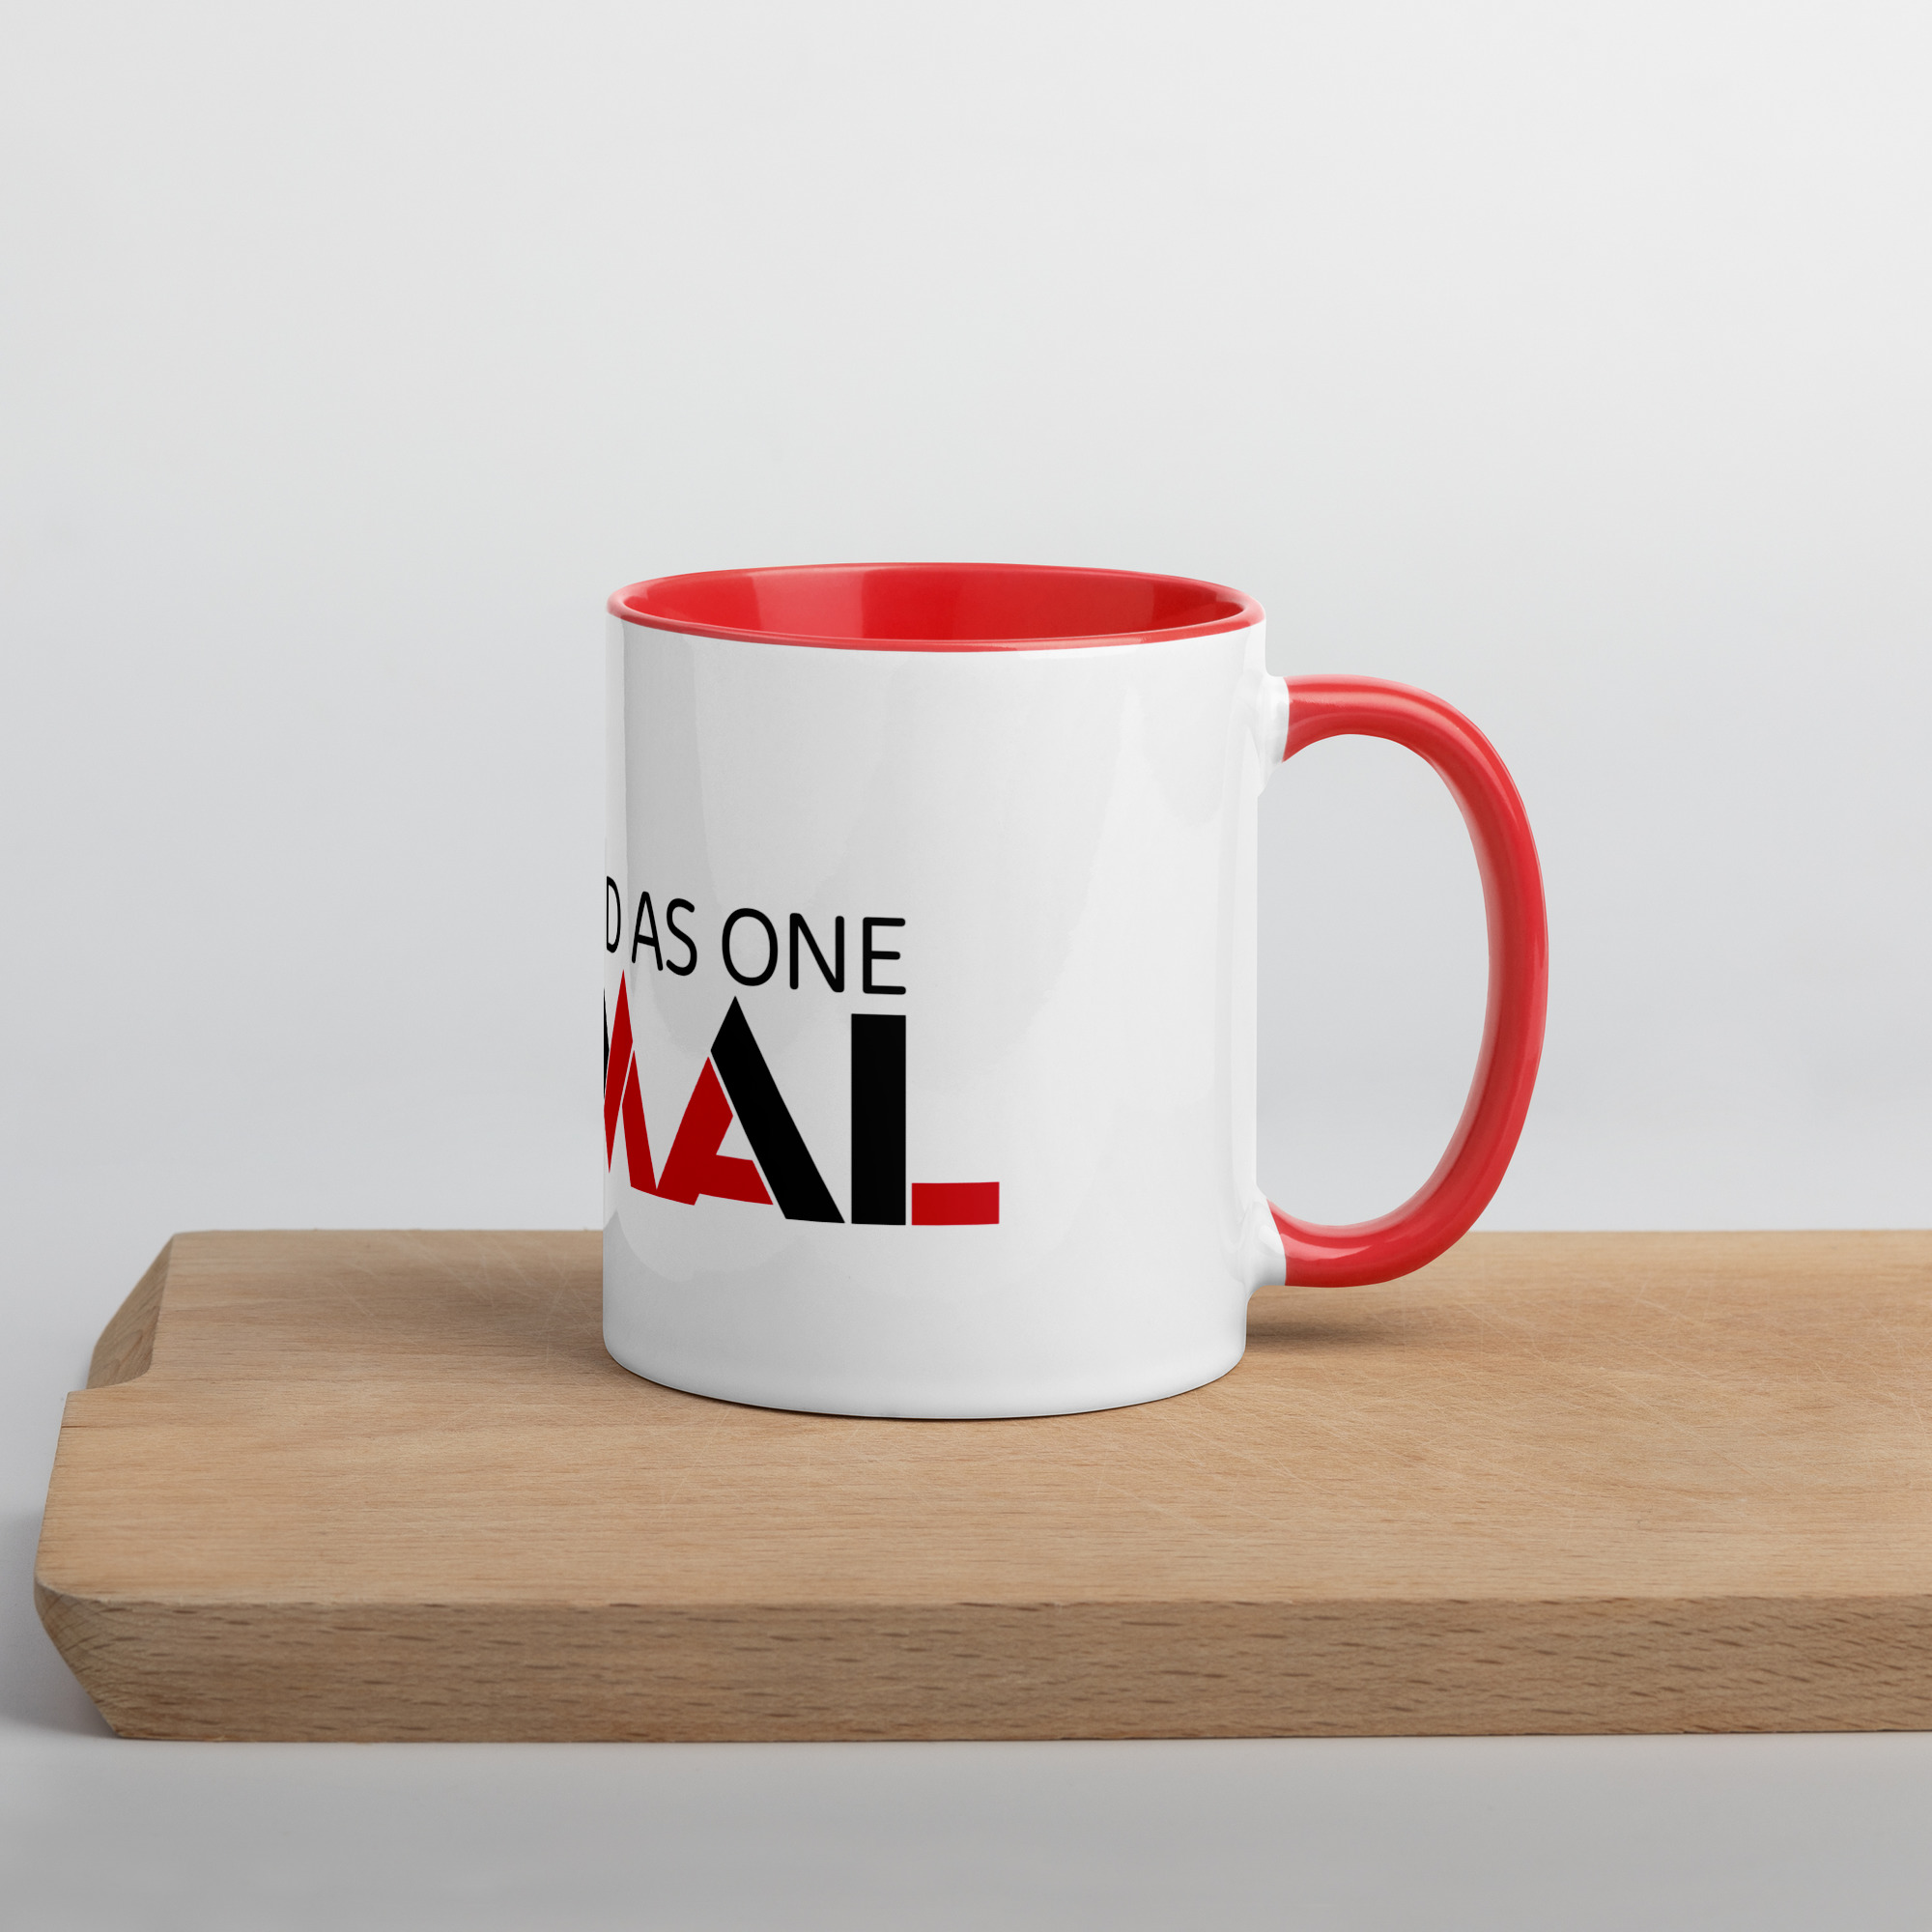 white-ceramic-mug-with-color-inside-red-11oz-right-6468277735ce3.jpg